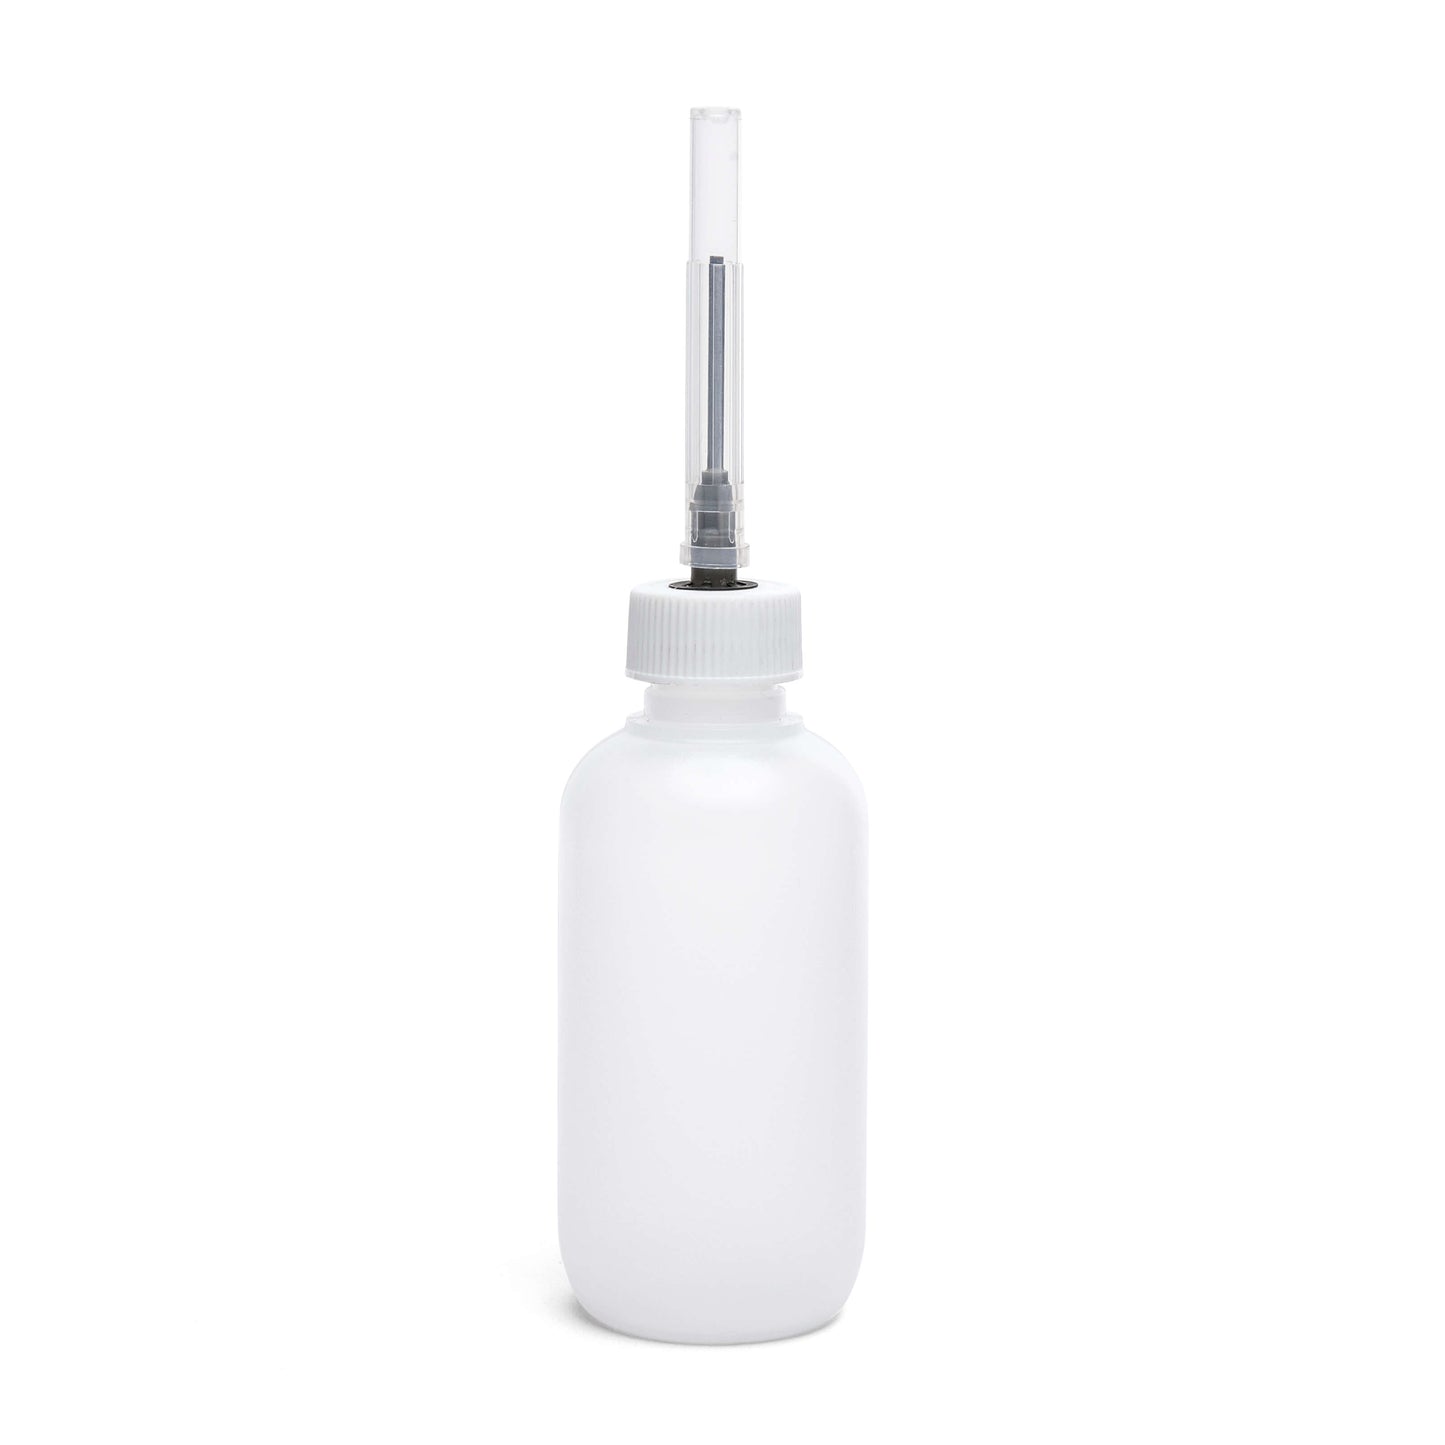 Applicator Bottle Squeeze Dispensers - Round Bottle - 16ga x 1" Needle